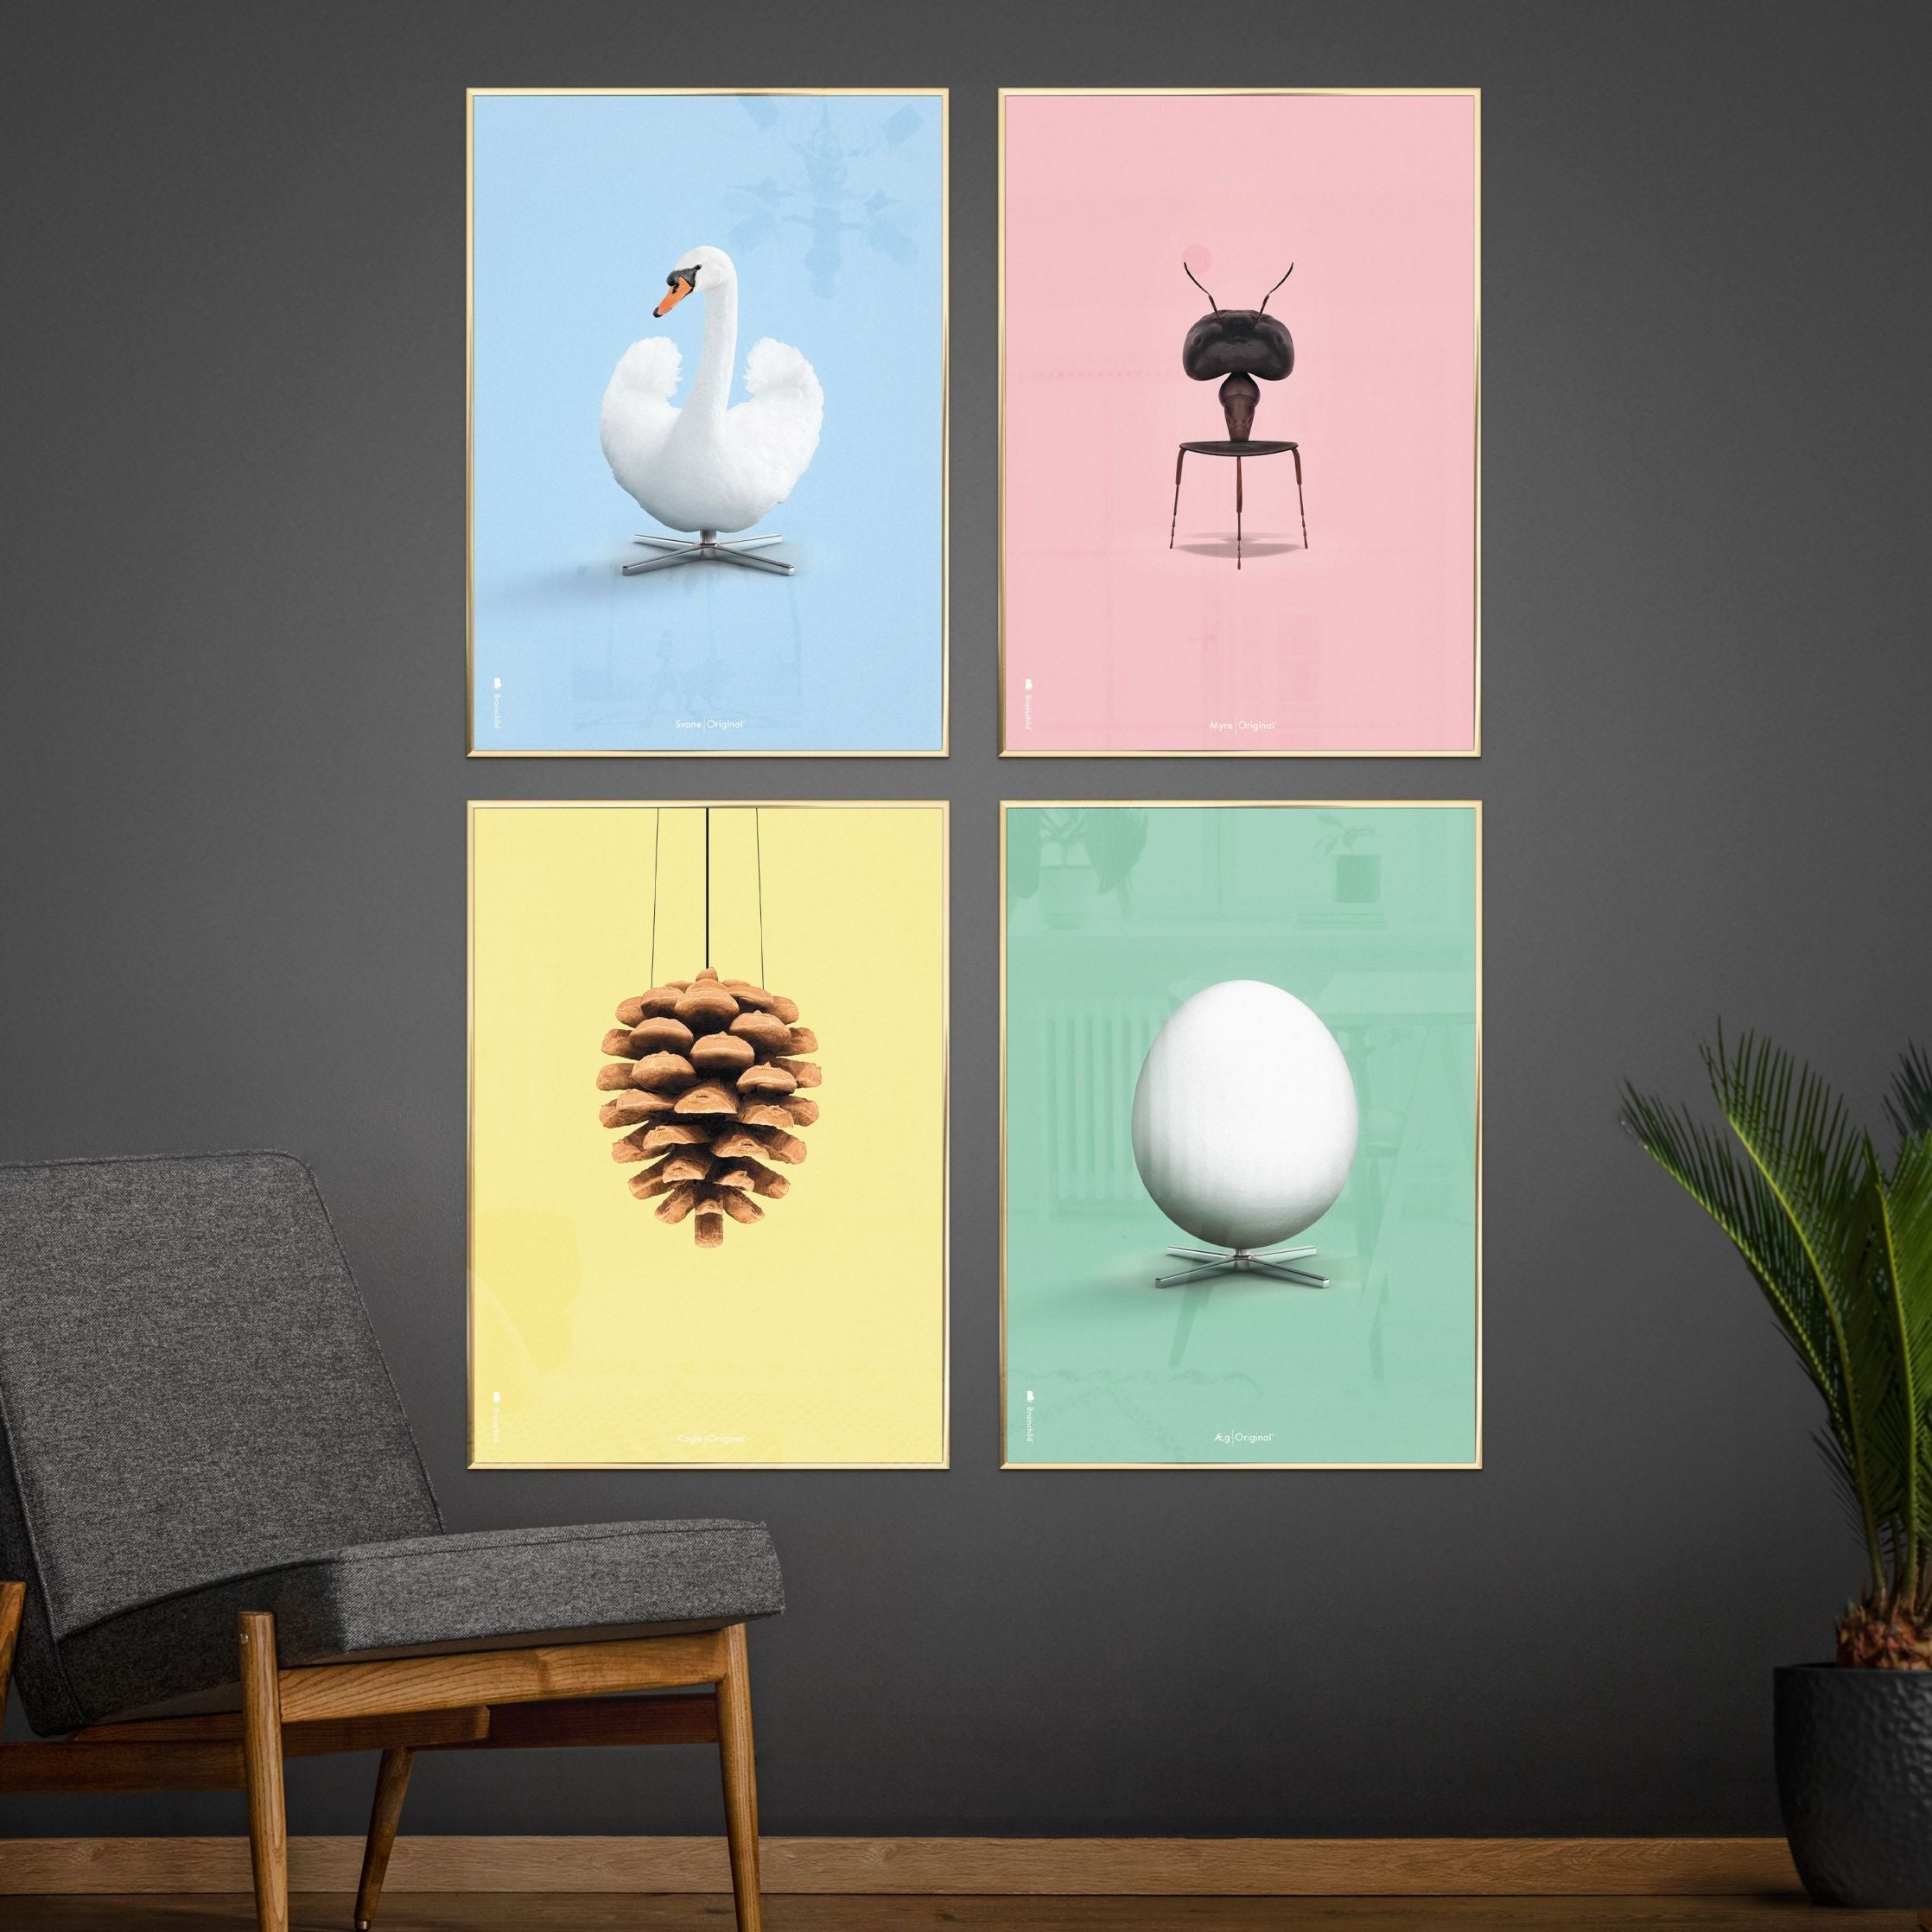 Brainchild Swan Classic Affisch, Light Wood Frame A5, ljusblå bakgrund